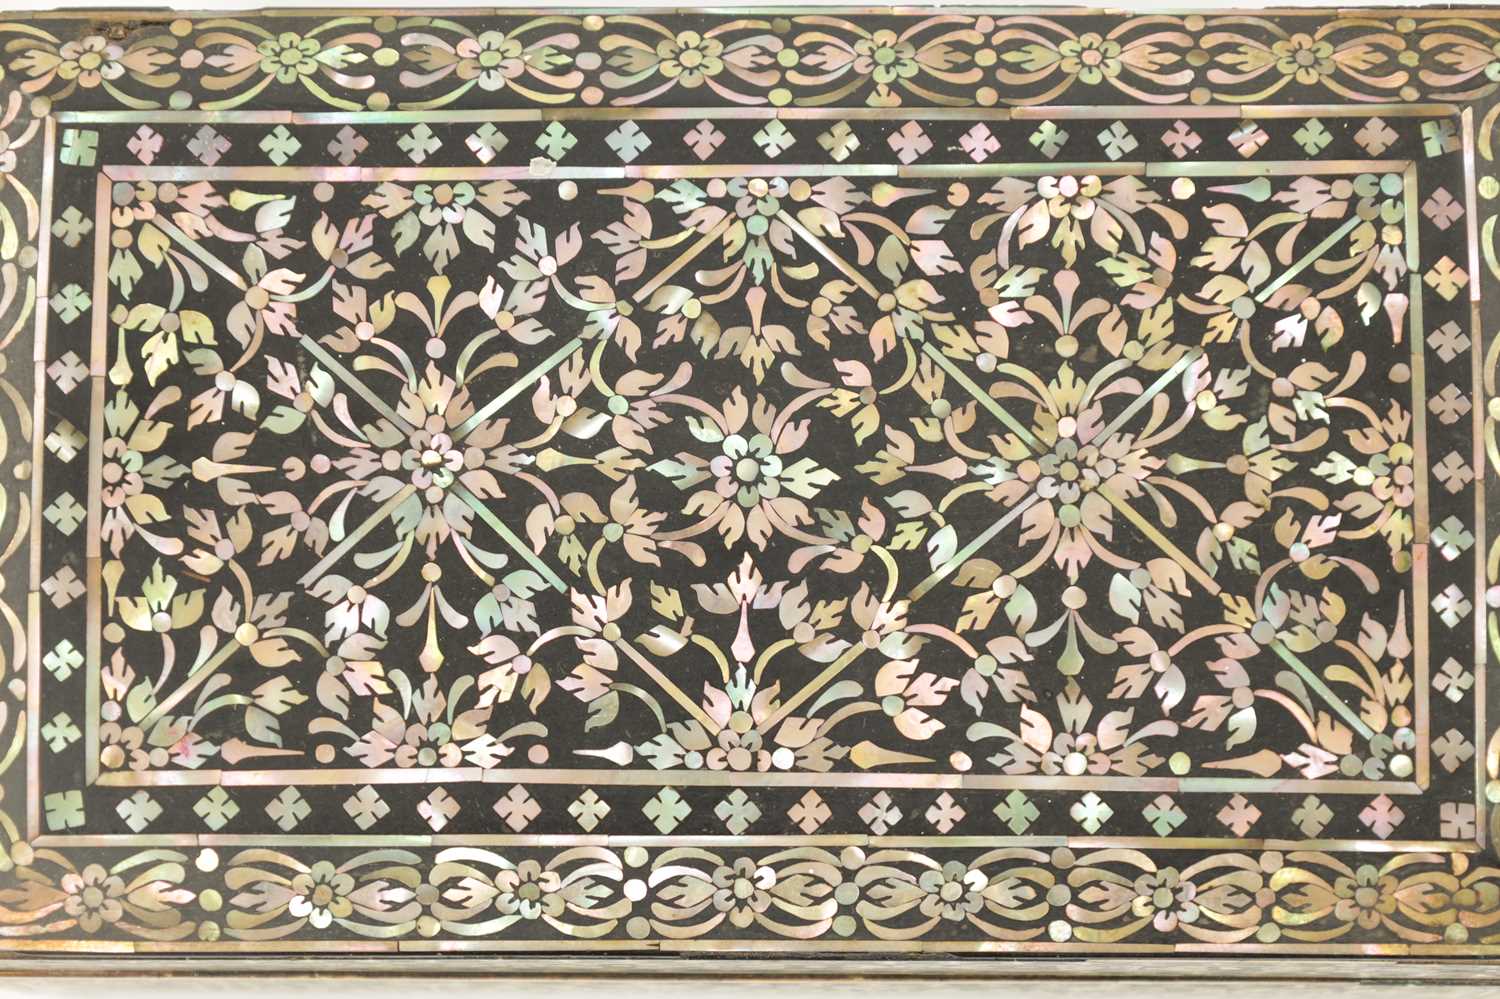 A RARE 17TH/18TH CENTURY INDO PORTUGUESE INLAID CASKET - Image 4 of 13